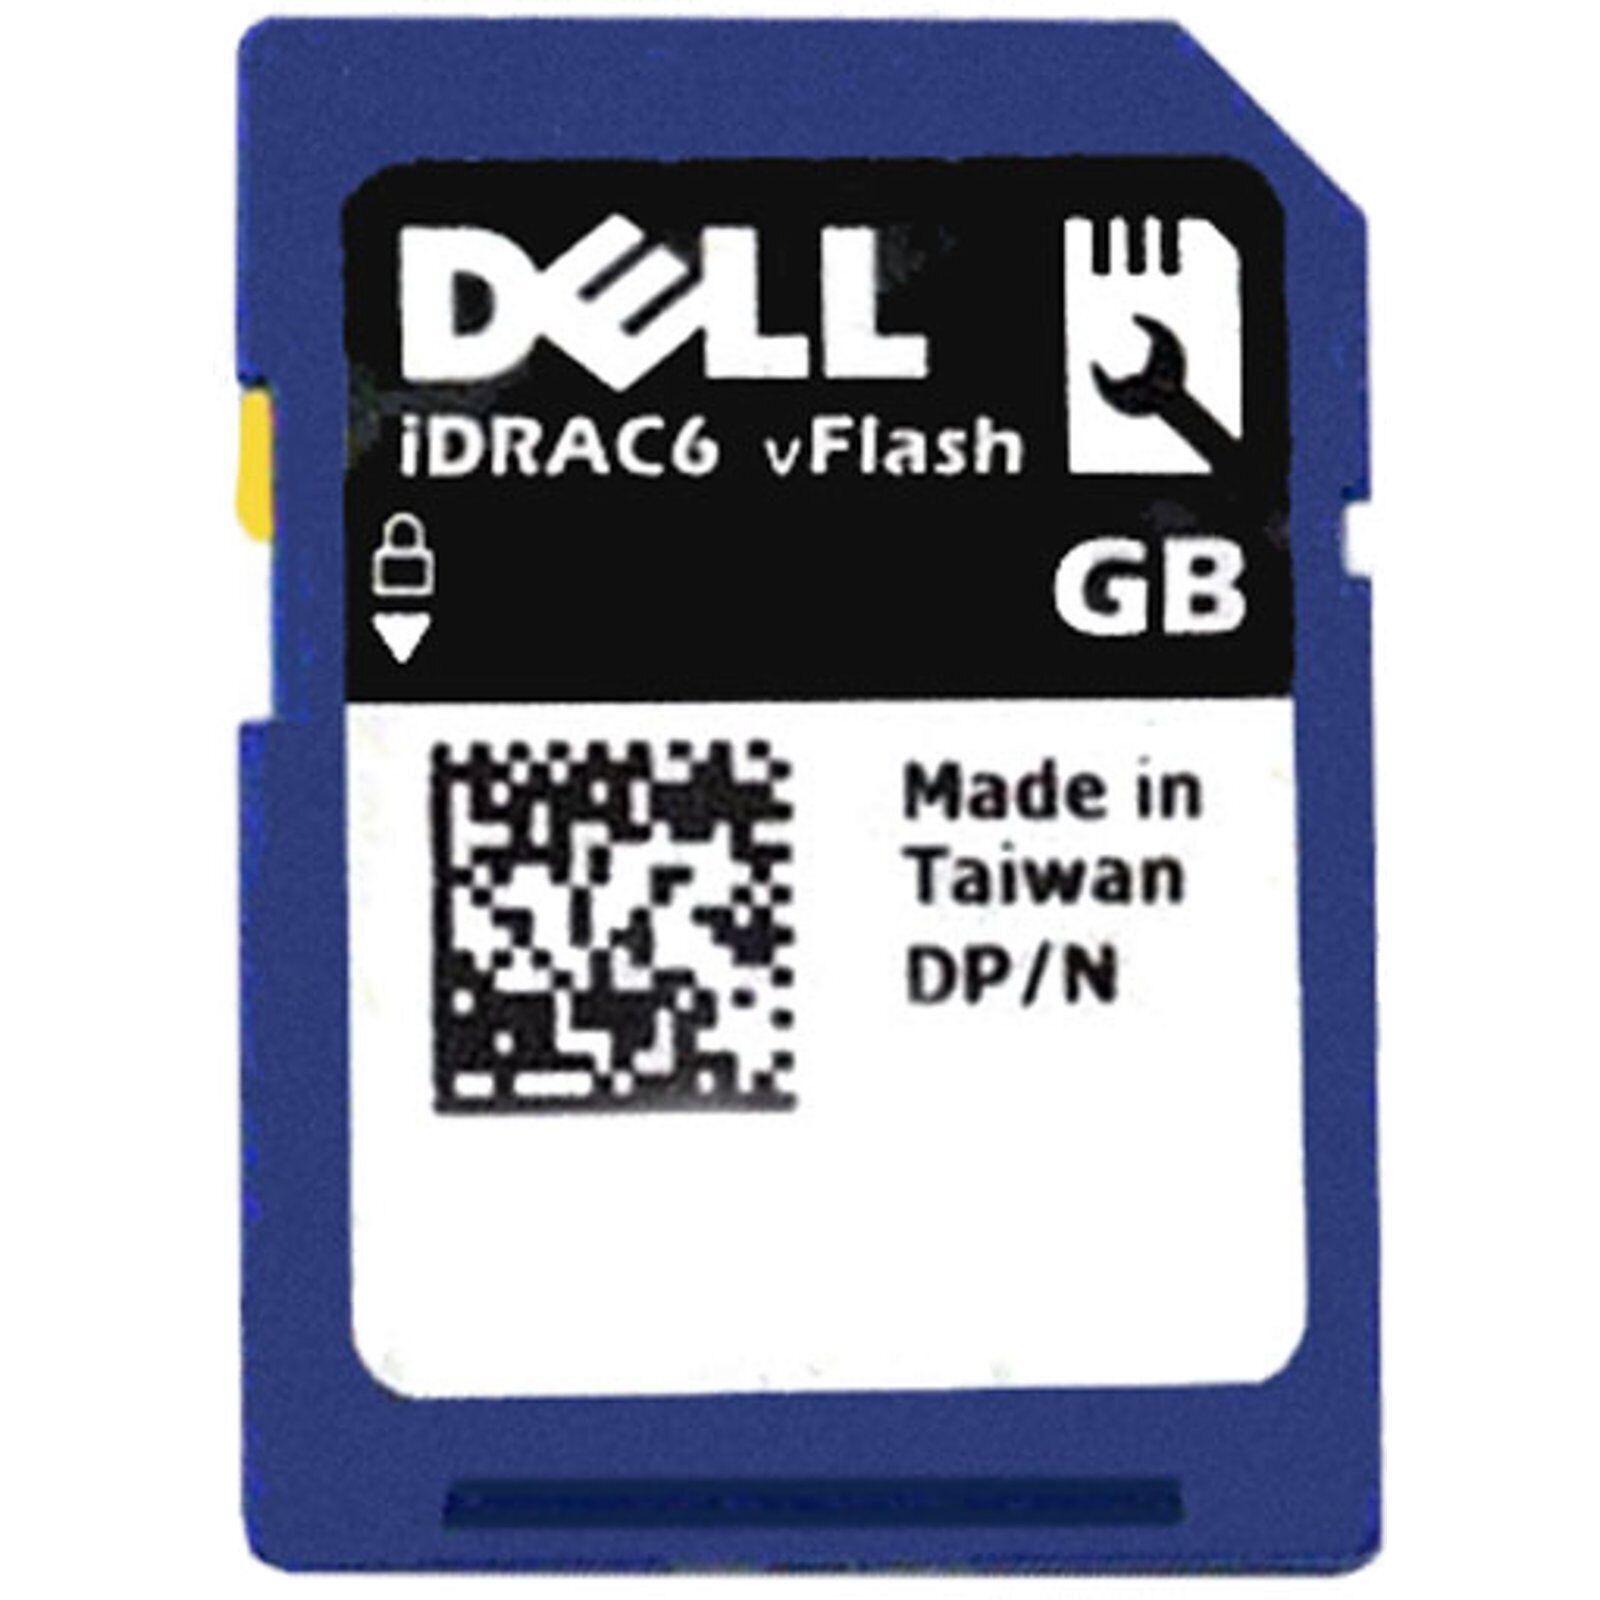 Dell 1GB iDRAC vFlash SD Crd (P789K)